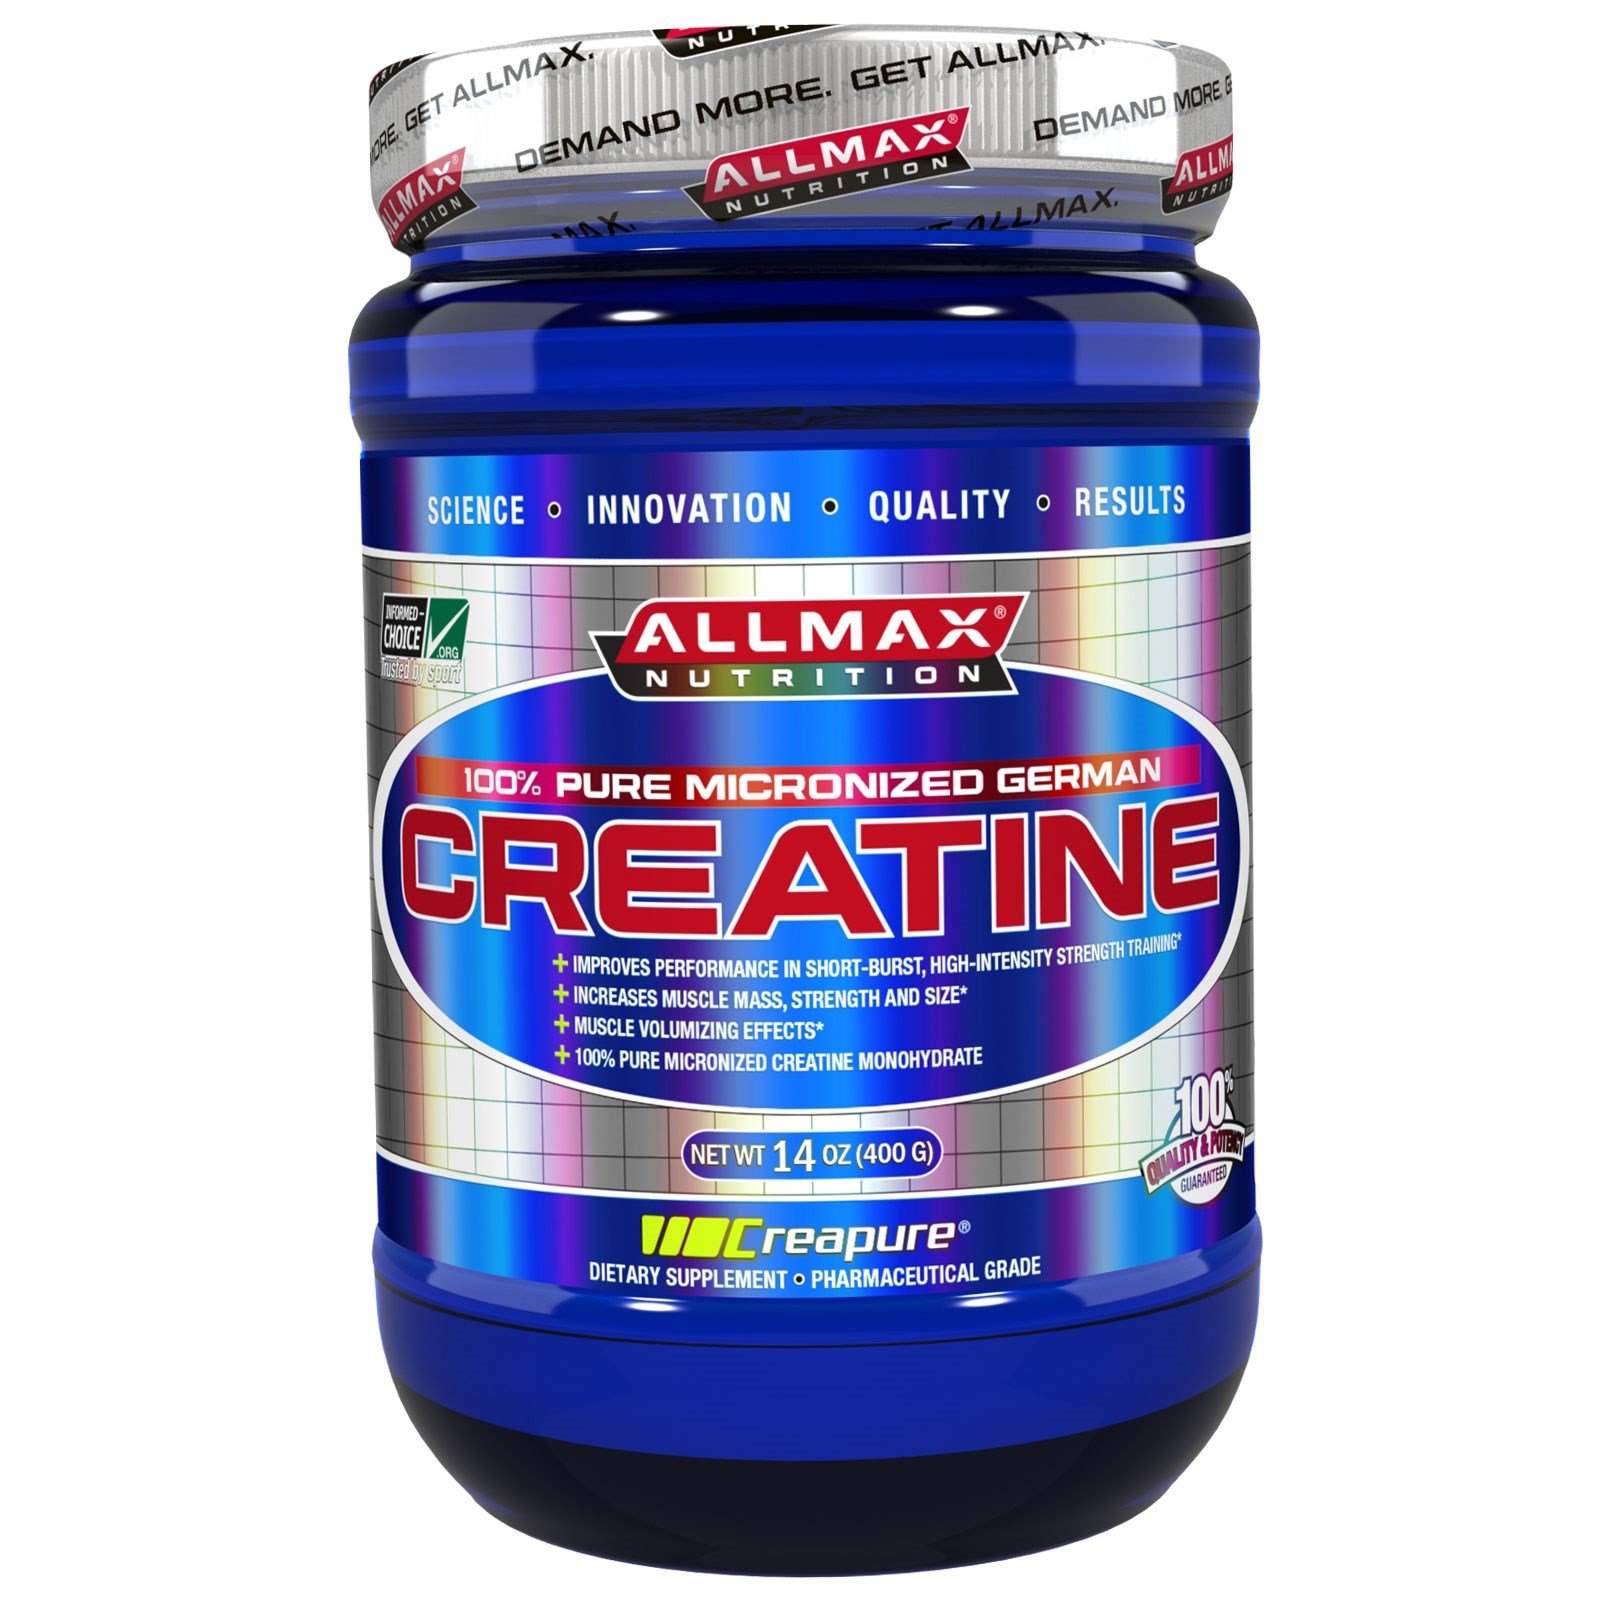 Creatine, 400 g, AllMax. Monohidrato de creatina. Mass Gain Energy & Endurance Strength enhancement 